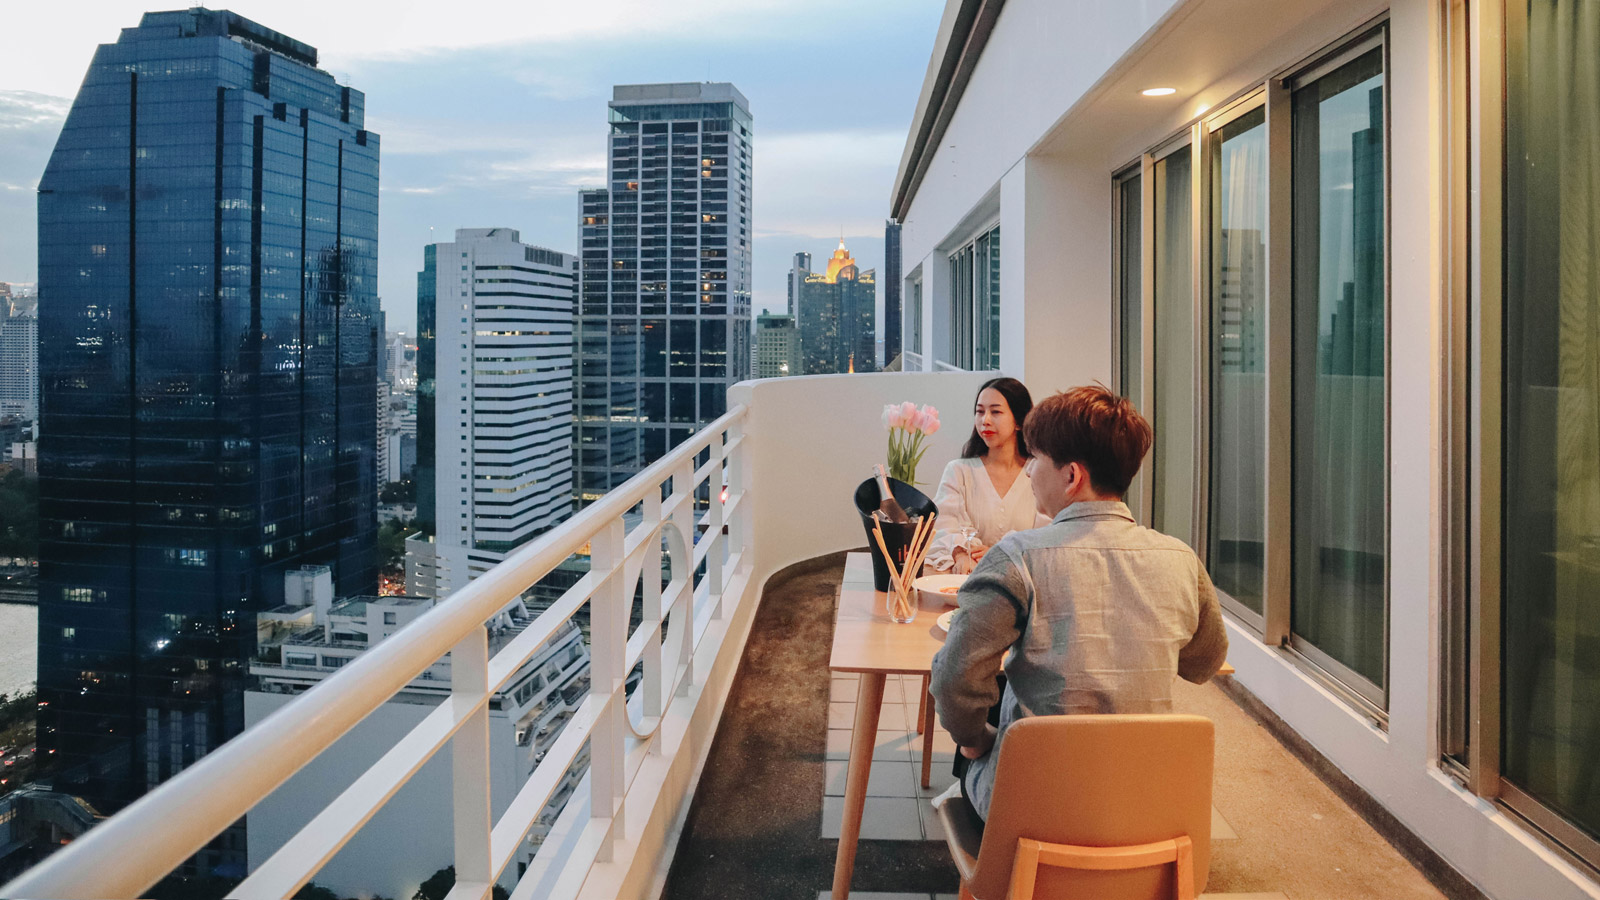 Studio Lakeview - Dinner on the balcony - שאמה לייקוויוו אסוק בנגקוק (Shama Lakeview Asoke Bangkok)